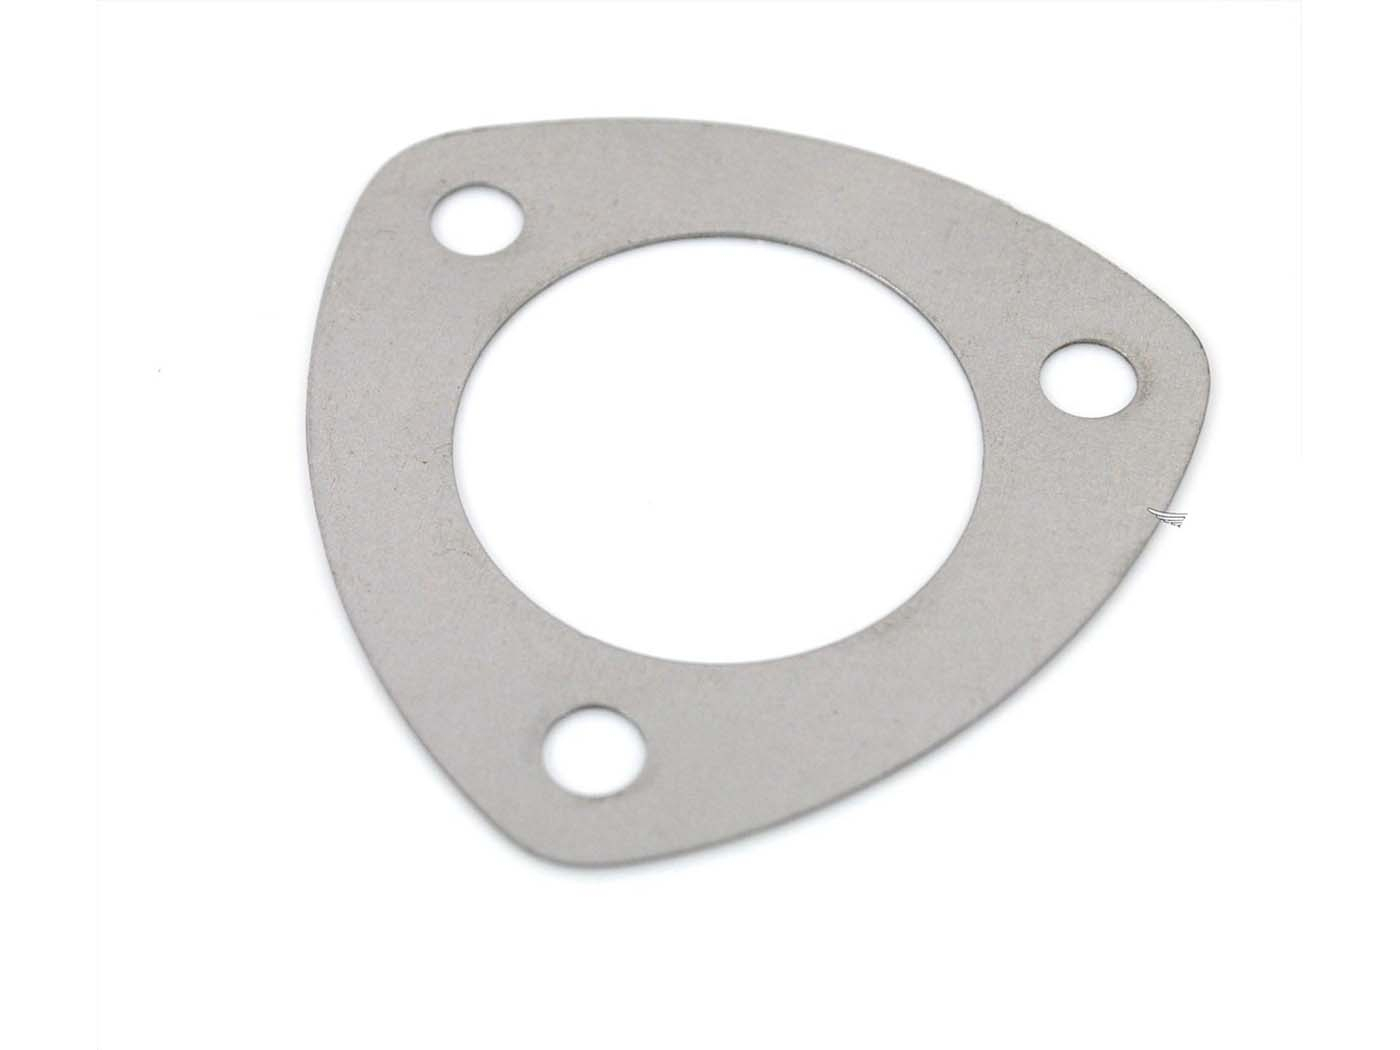 Clutch Locking Plate For Kreidler Florett RS, RMC, LF, LH, Super 4, TM, RM, Egg Tank K54/0M, Flory MF 23